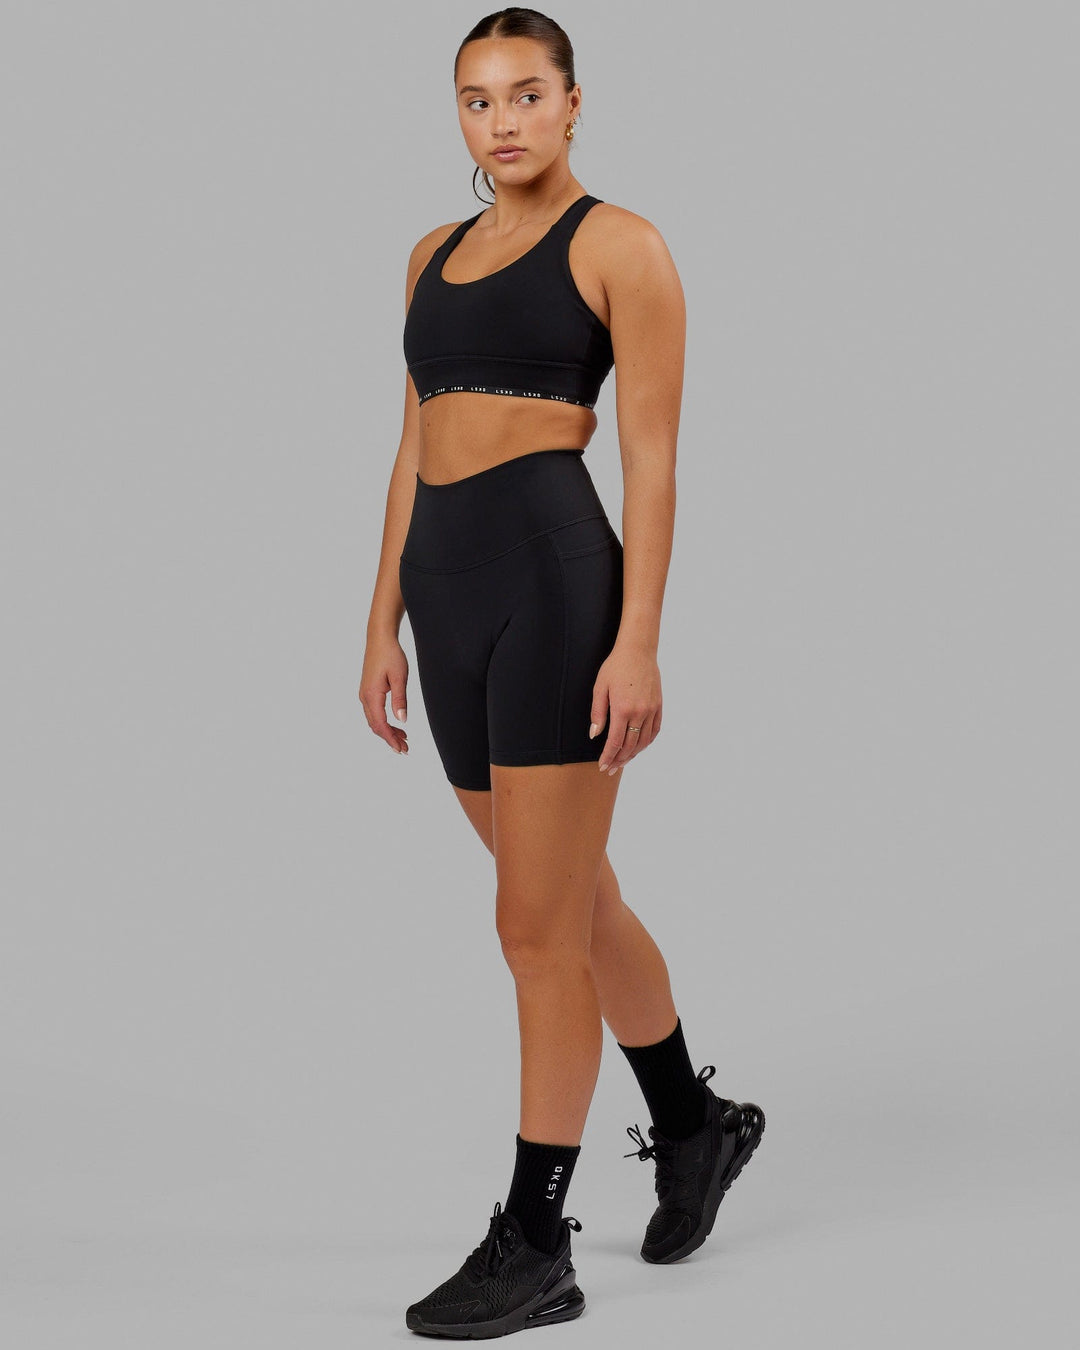 Woman wearing Fusion Mid Short Tight - Black